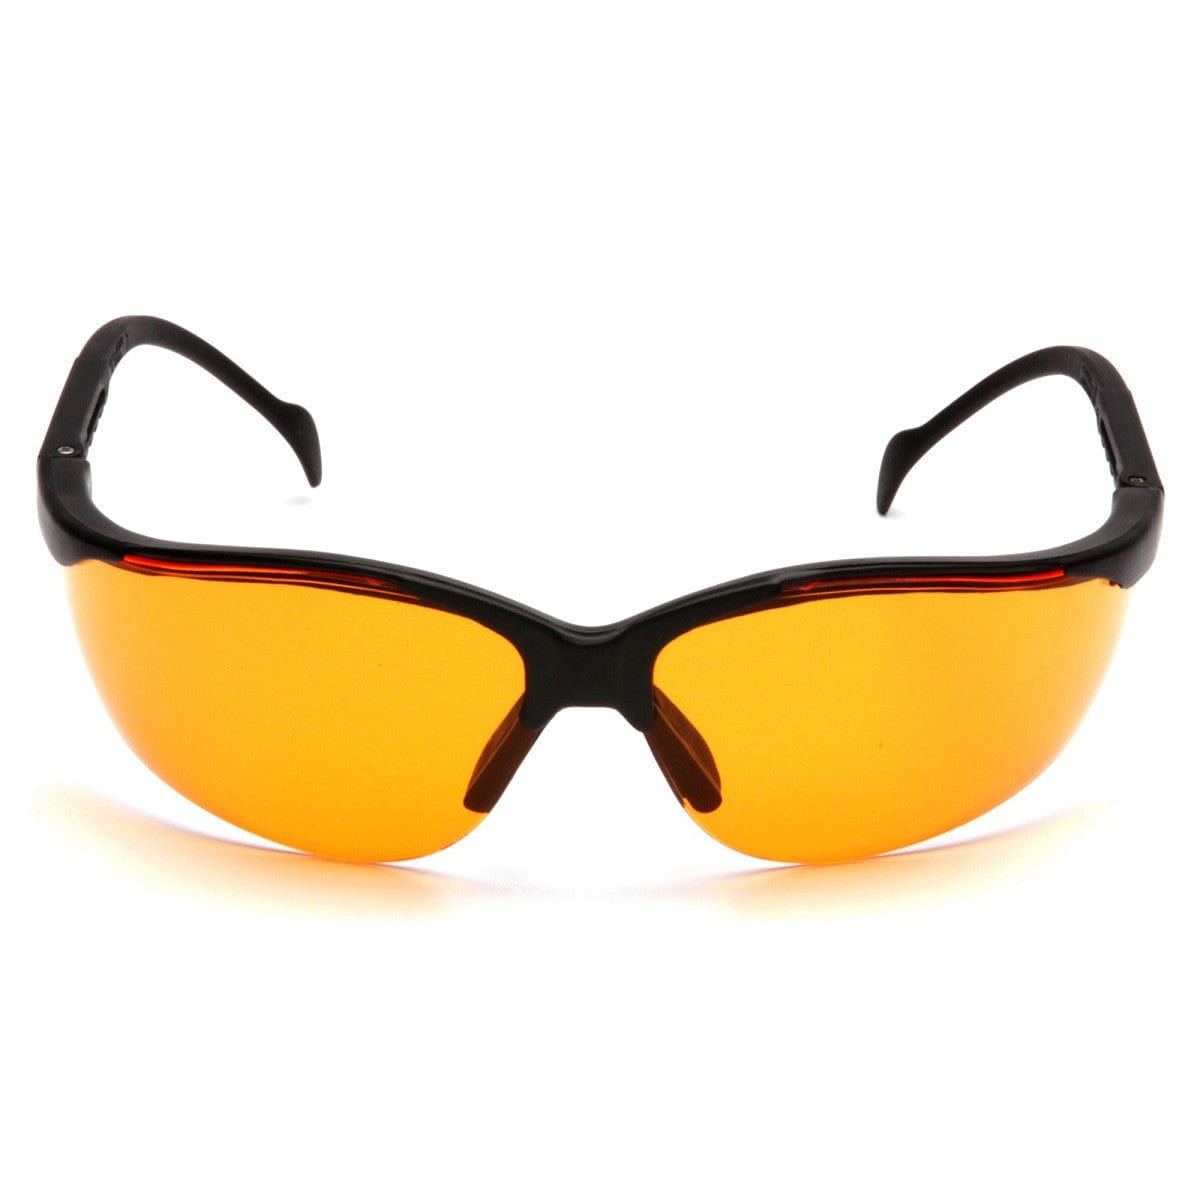 Pyramex Venture 2 Safety Glasses Black Frame Orange Lens SB1840S Front View